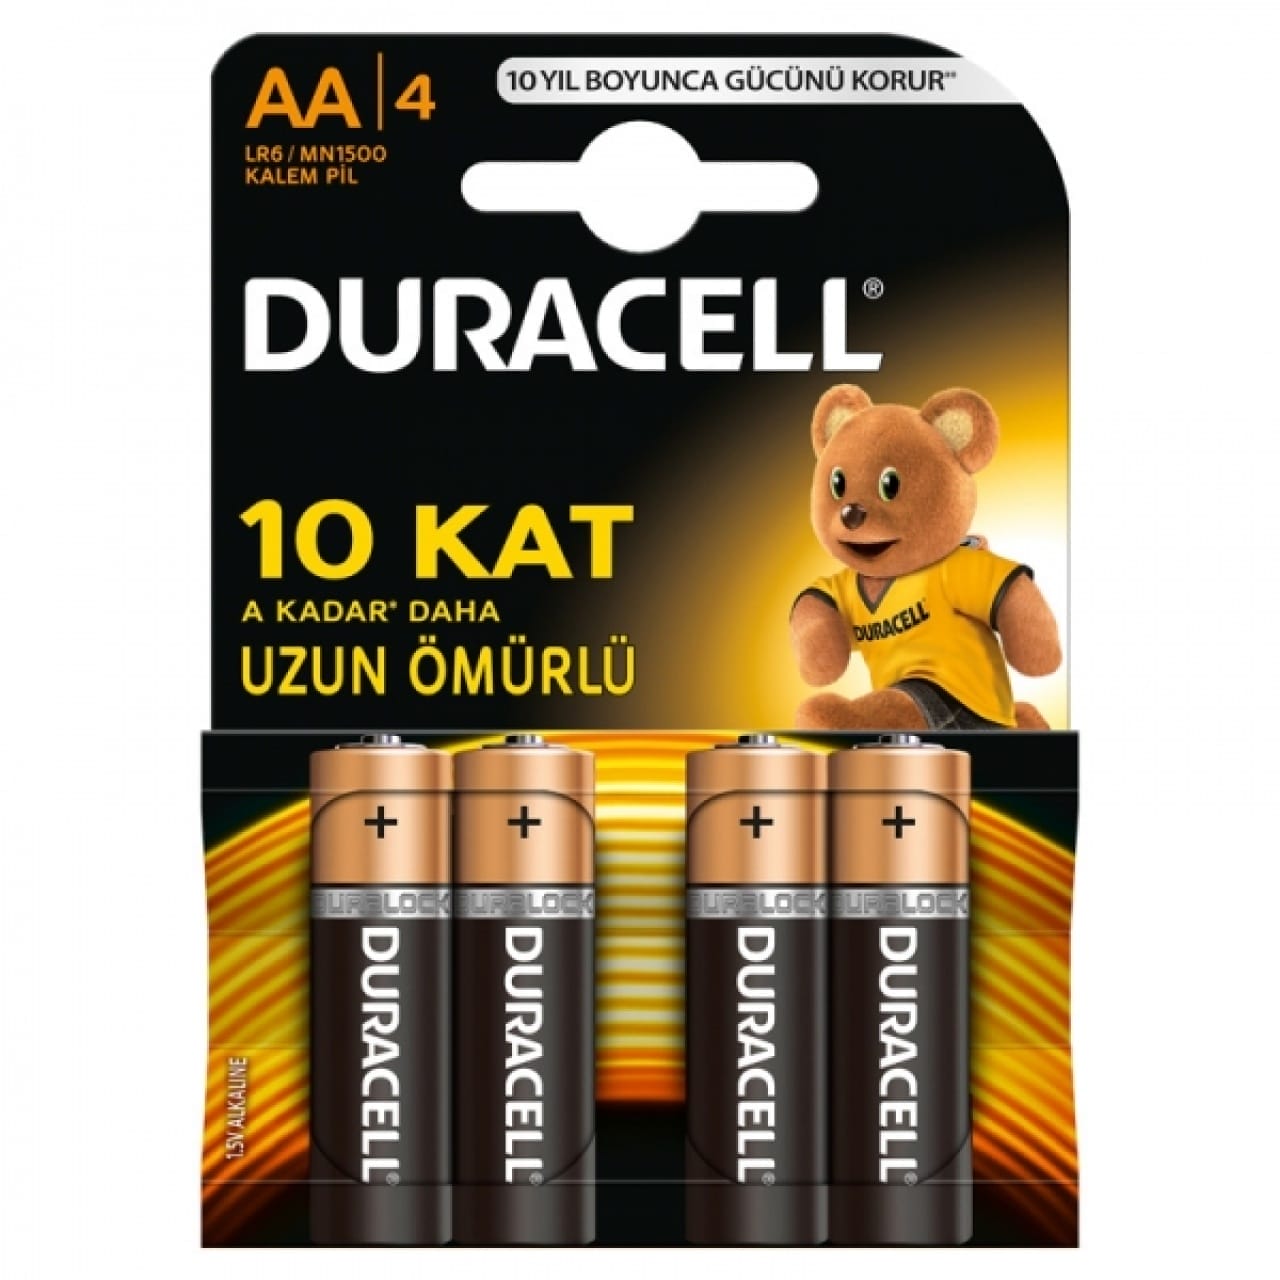 Duracell Basic Pen Battery 4 Aa 4 pc 